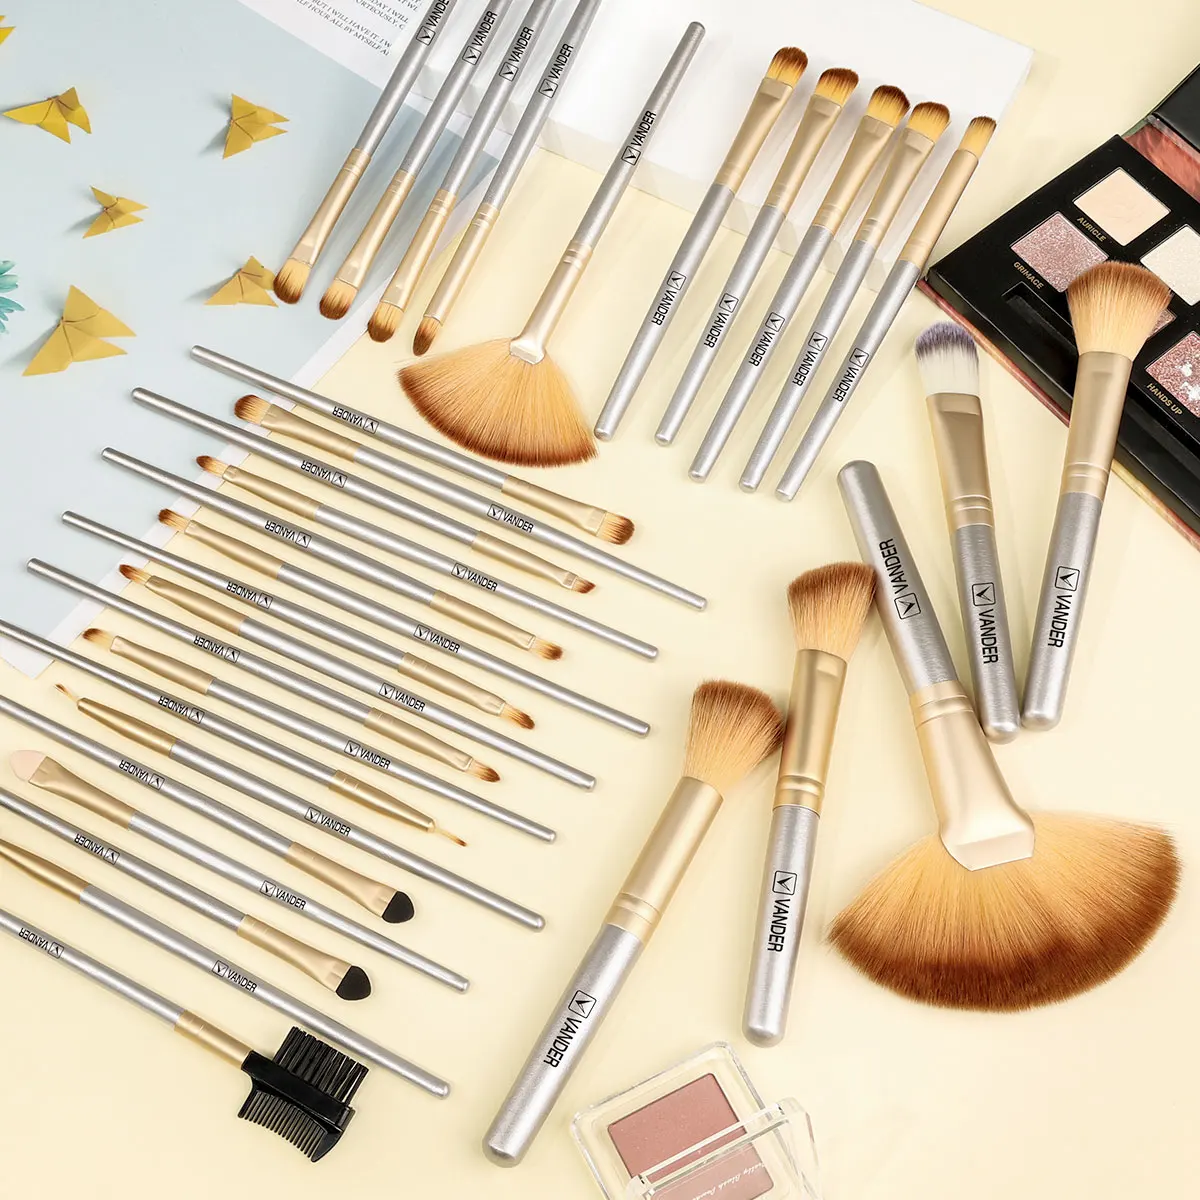 

24/32 Pcs Makeup Brushes Set with Bag Powder Foundation Contour Blush Concealer Eyeshadow Blending Liner Makeup Beauty Tools